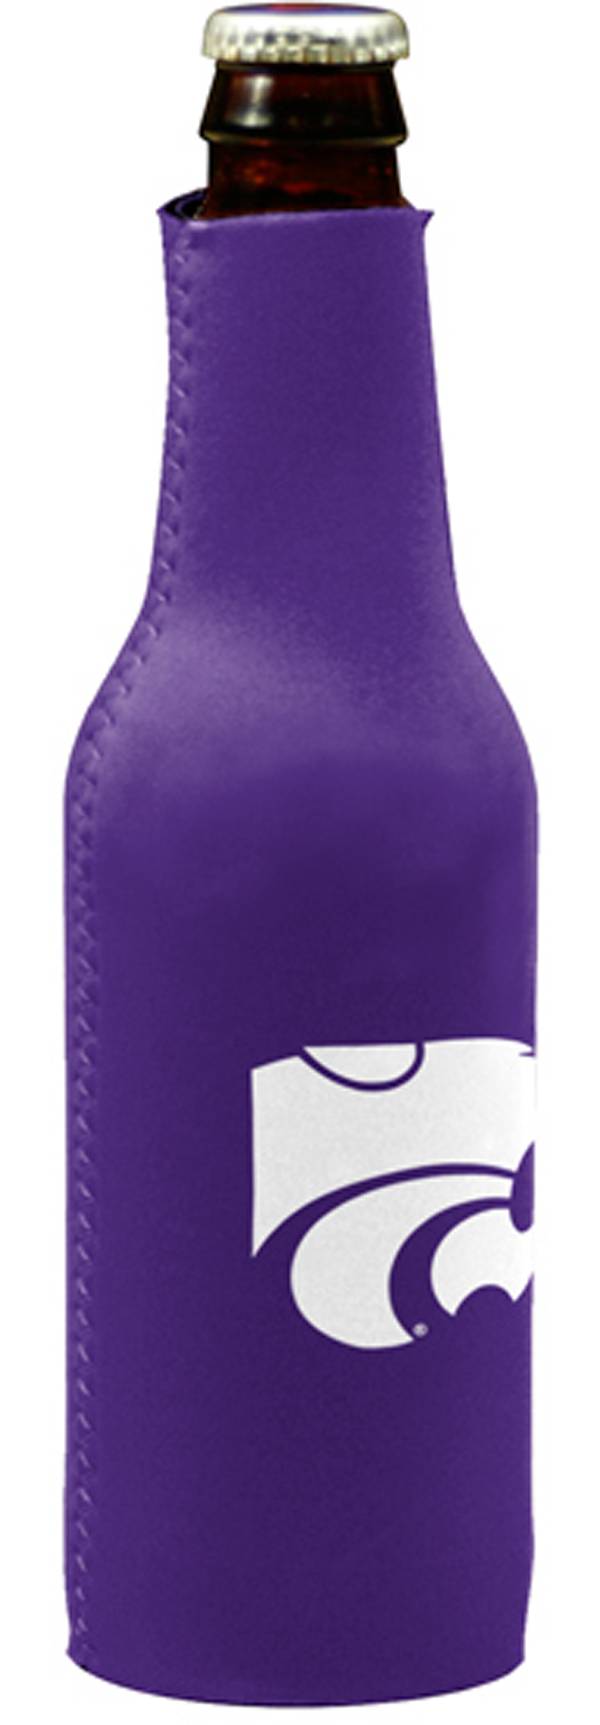 Logo Brands Kansas State Wildcats Bottle Cooler product image